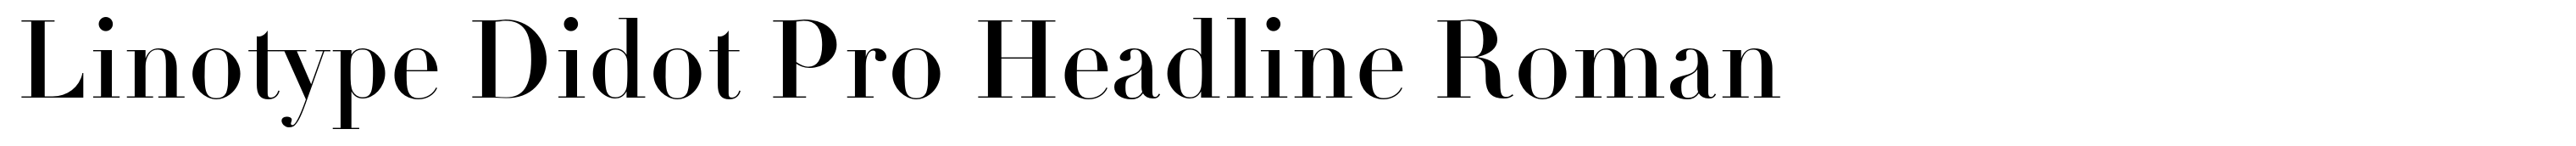 Linotype Didot Pro Headline Roman